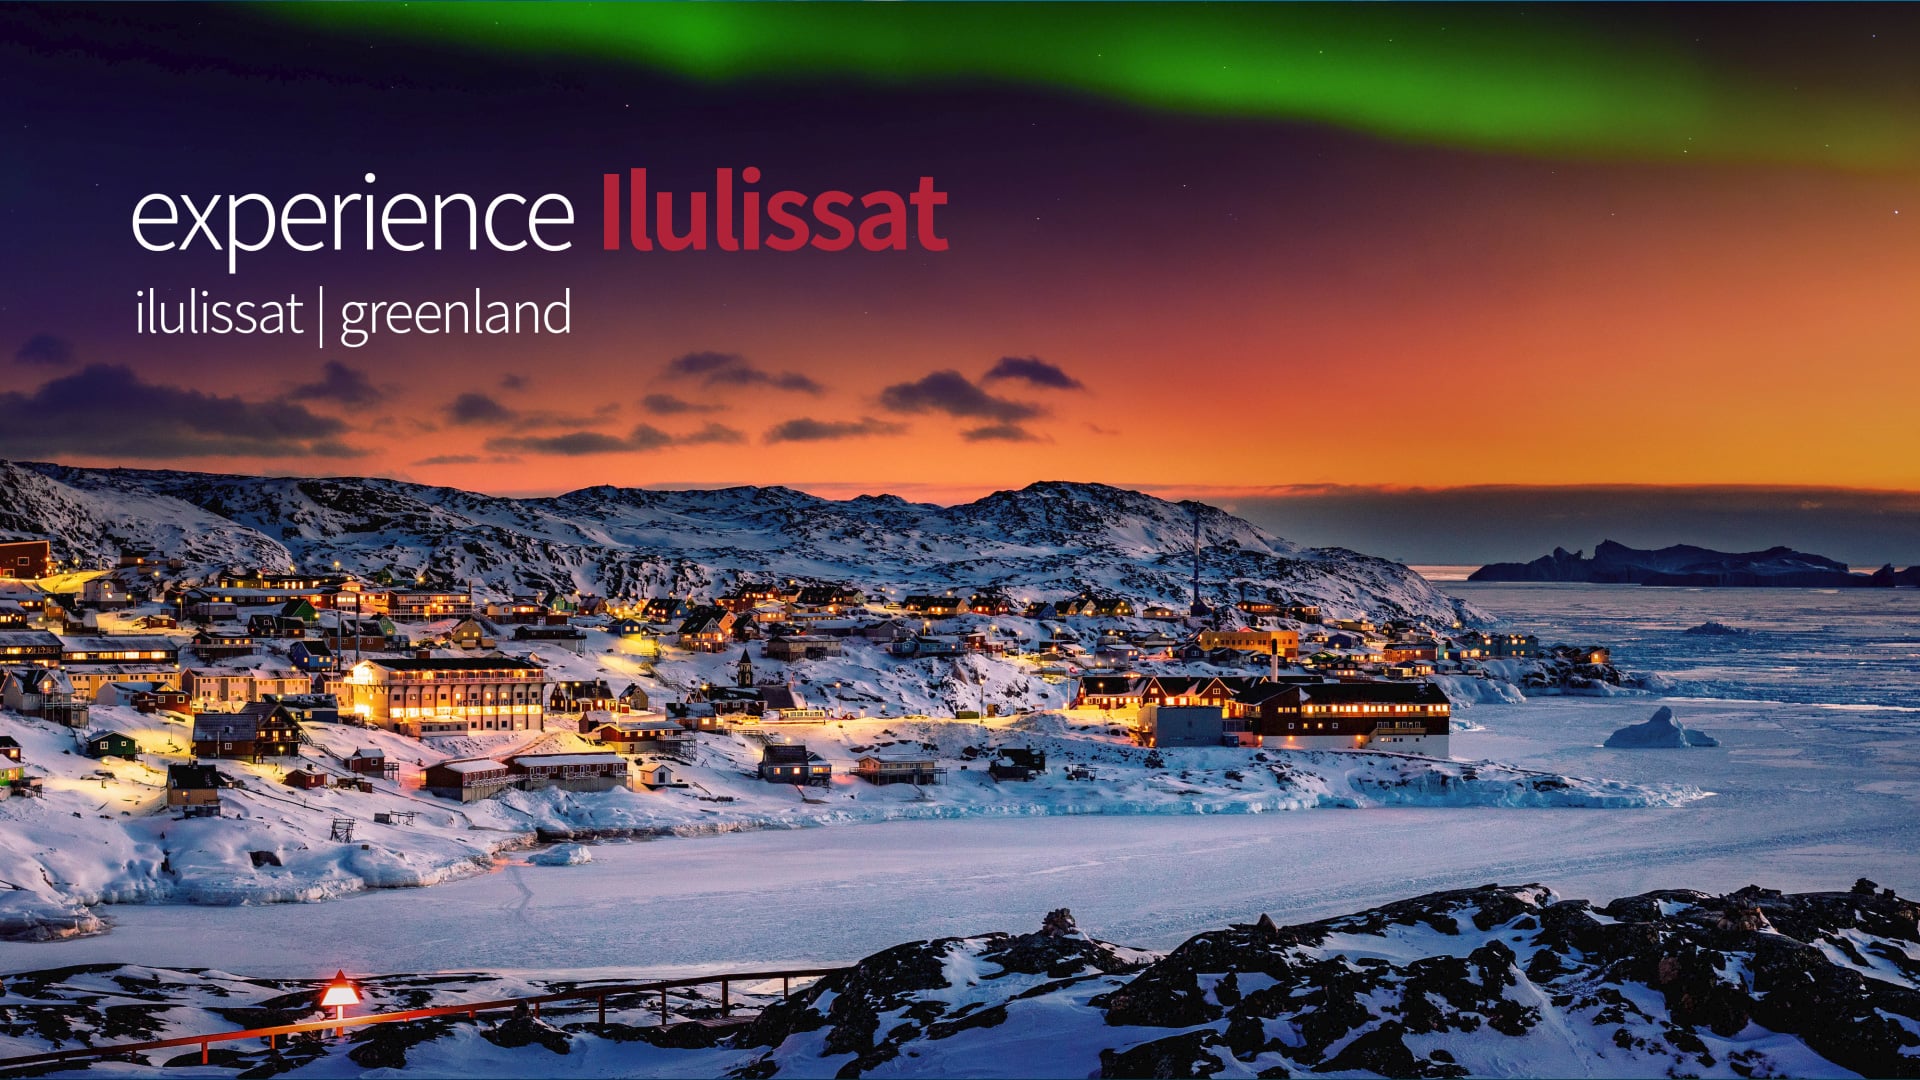 indlysende bad fejl Experience Ilulissat, Greenland on Vimeo